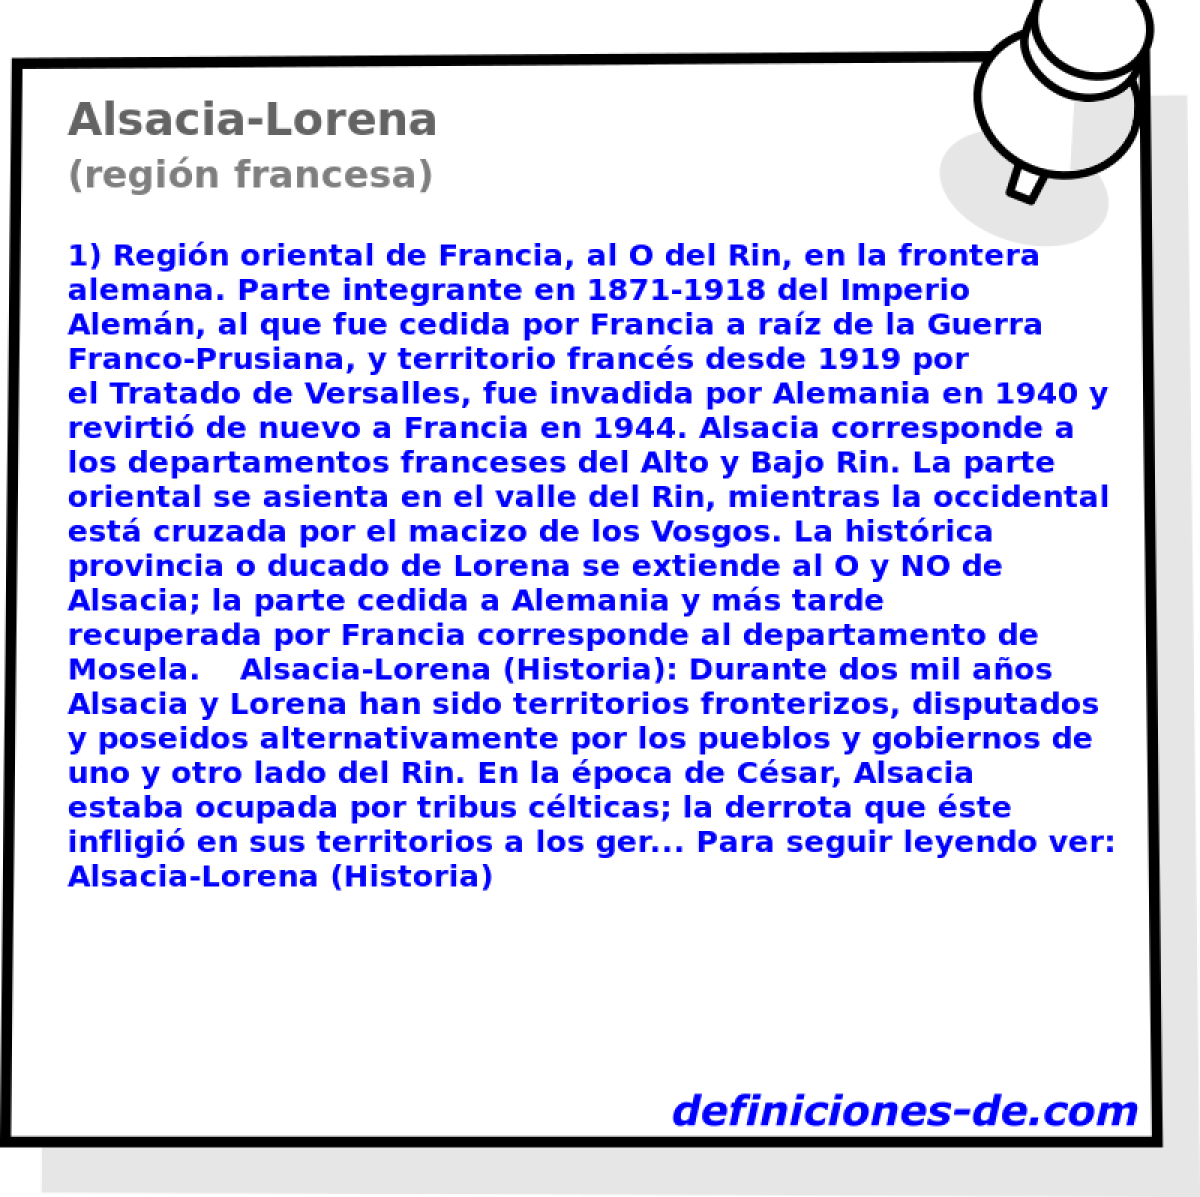 Alsacia-Lorena (regin francesa)